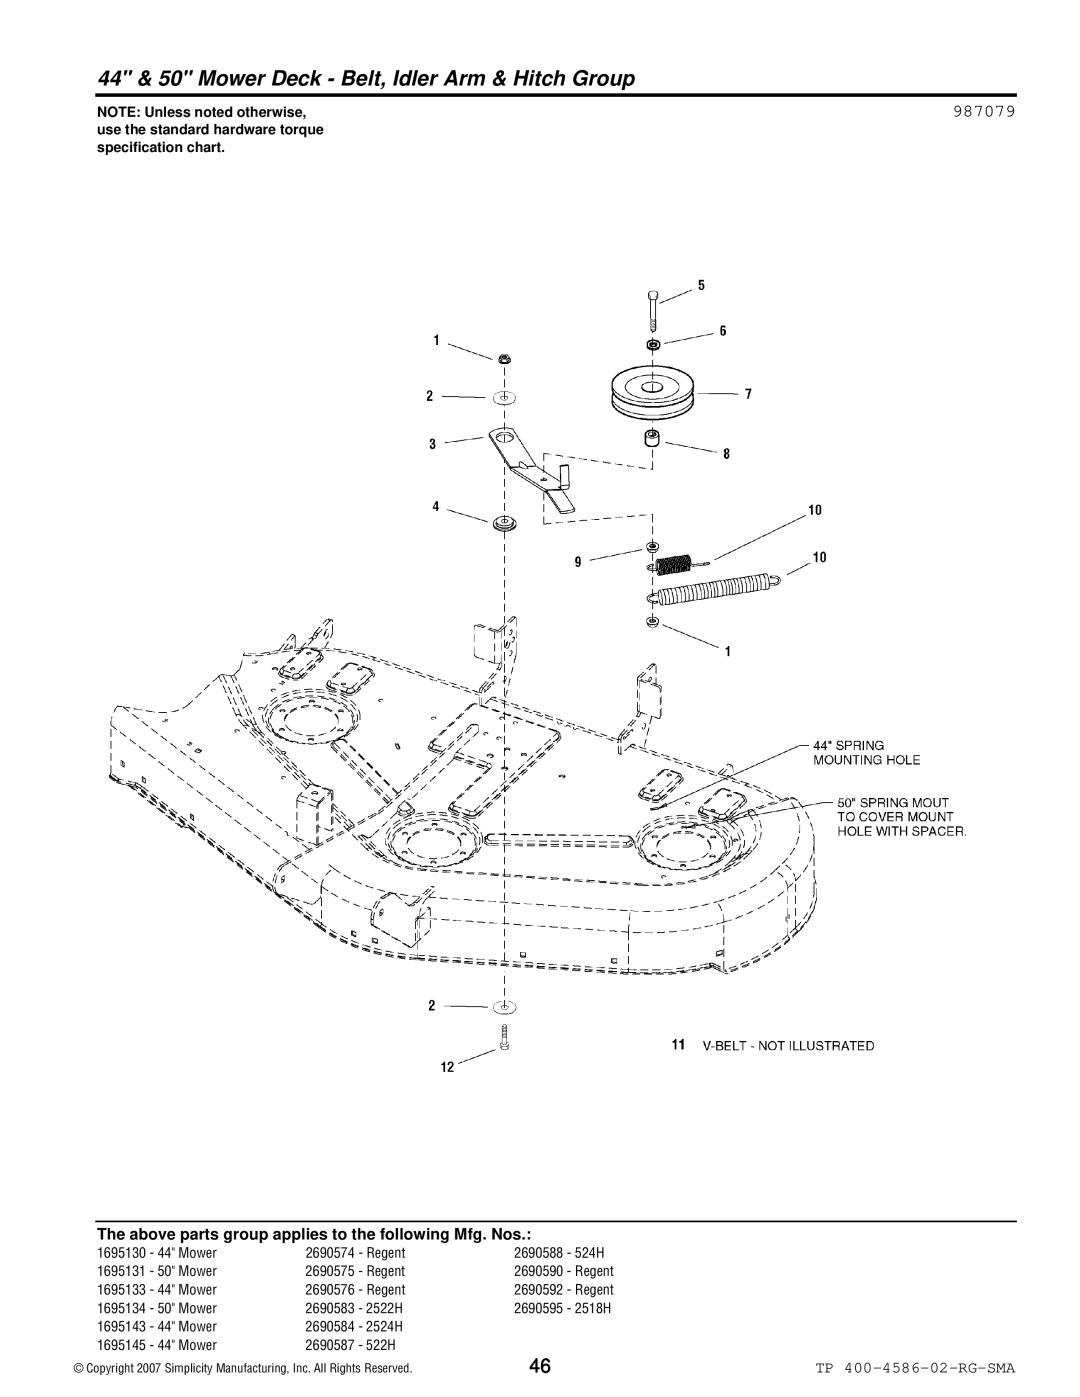 Snapper 500 Series manual 44 & 50 Mower Deck Belt, Idler Arm & Hitch Group, 987079 